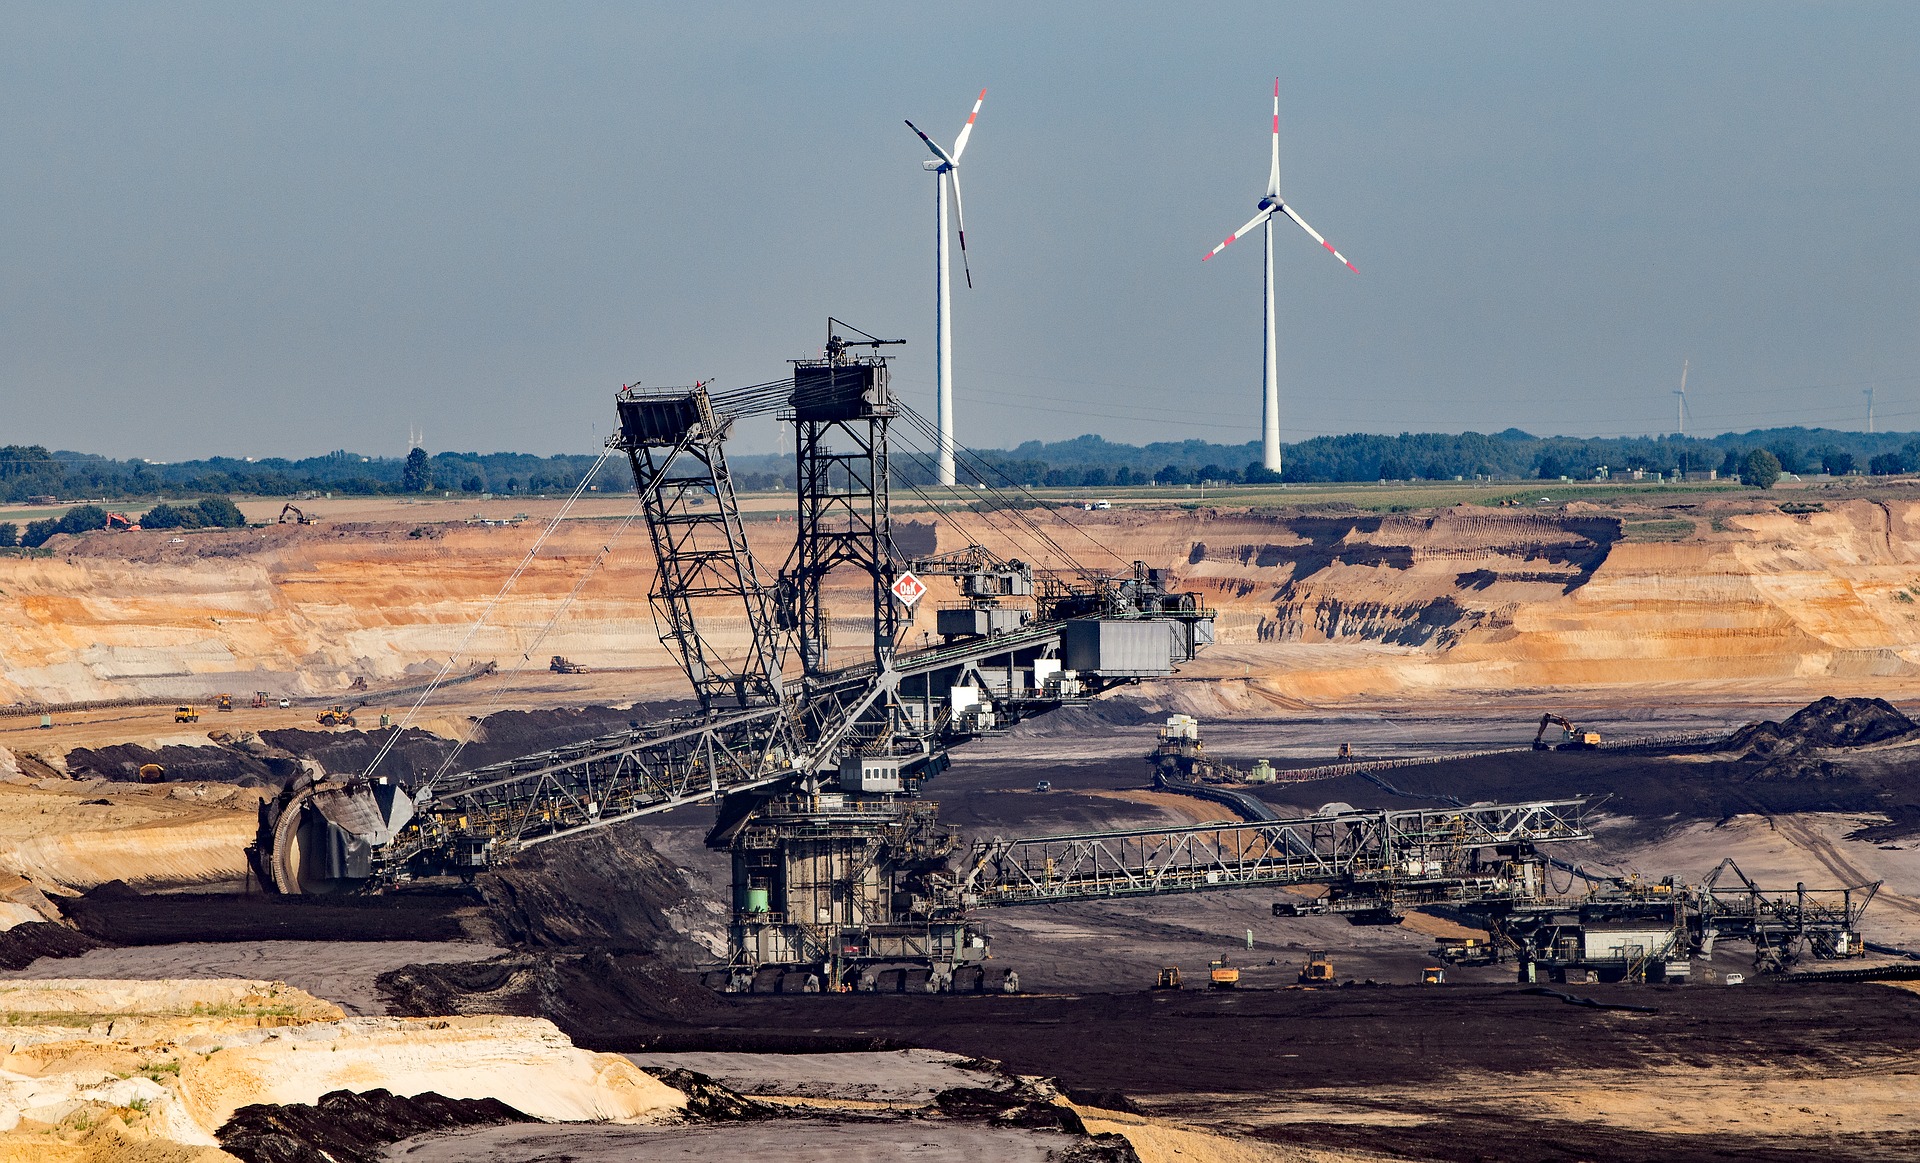 Open pit mine representing the Anthropocene